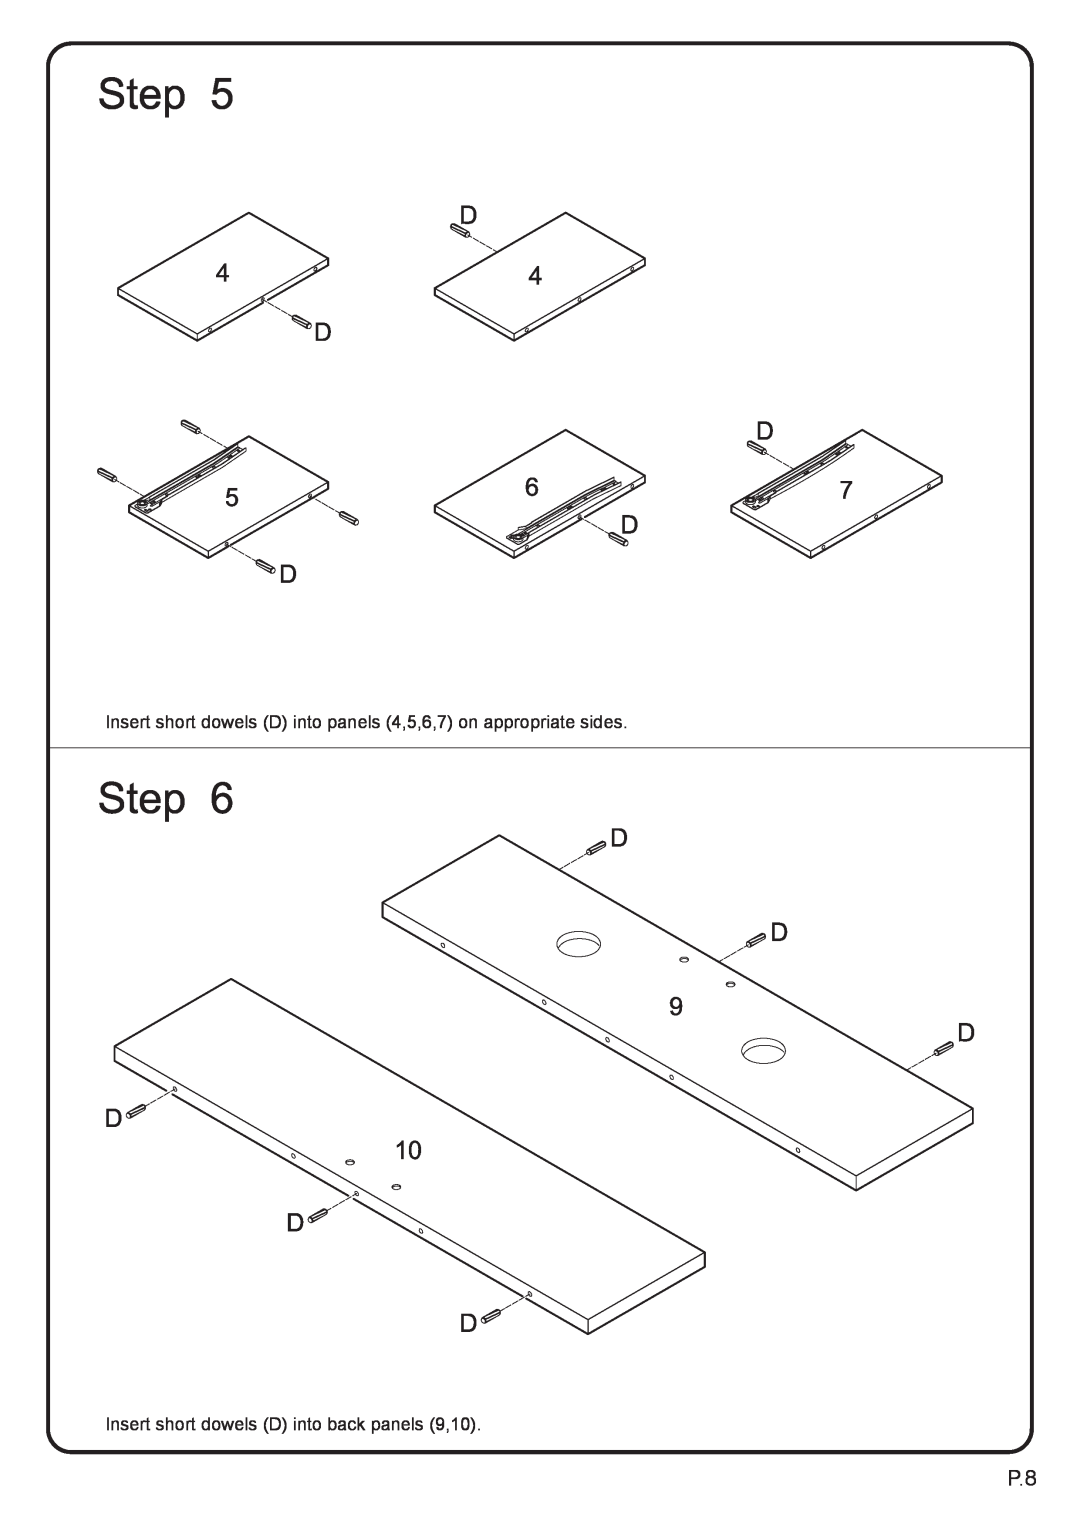 Walker P60CMPBL-MT manual Insert short dowels D into panels 4,5,6,7 on appropriate sides 